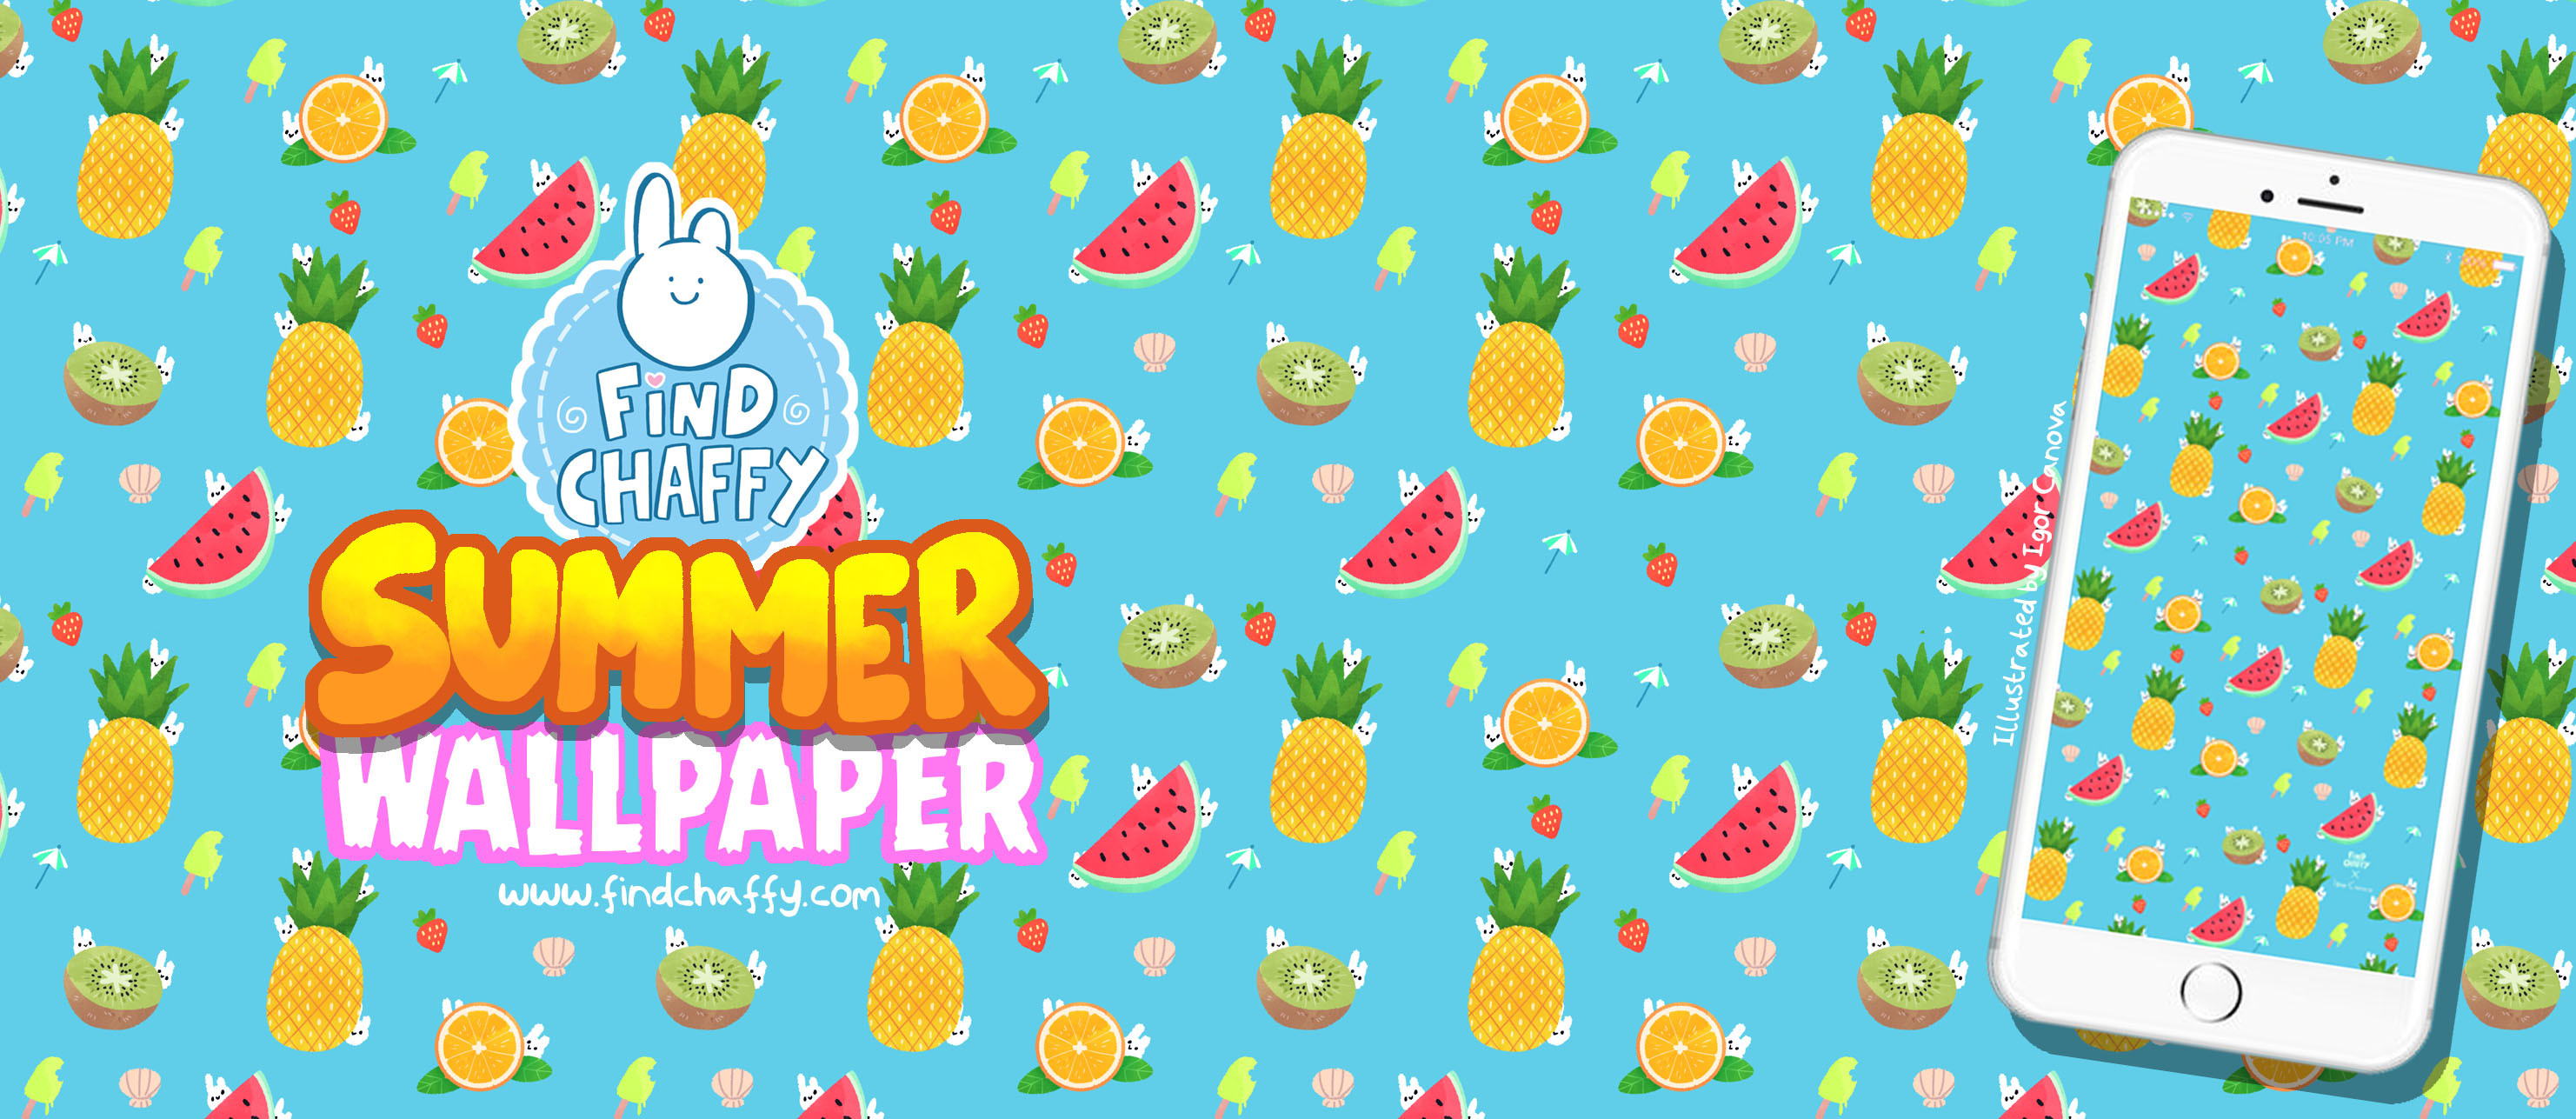 2963x1287 Find Chaffy – Summer wallpaper!